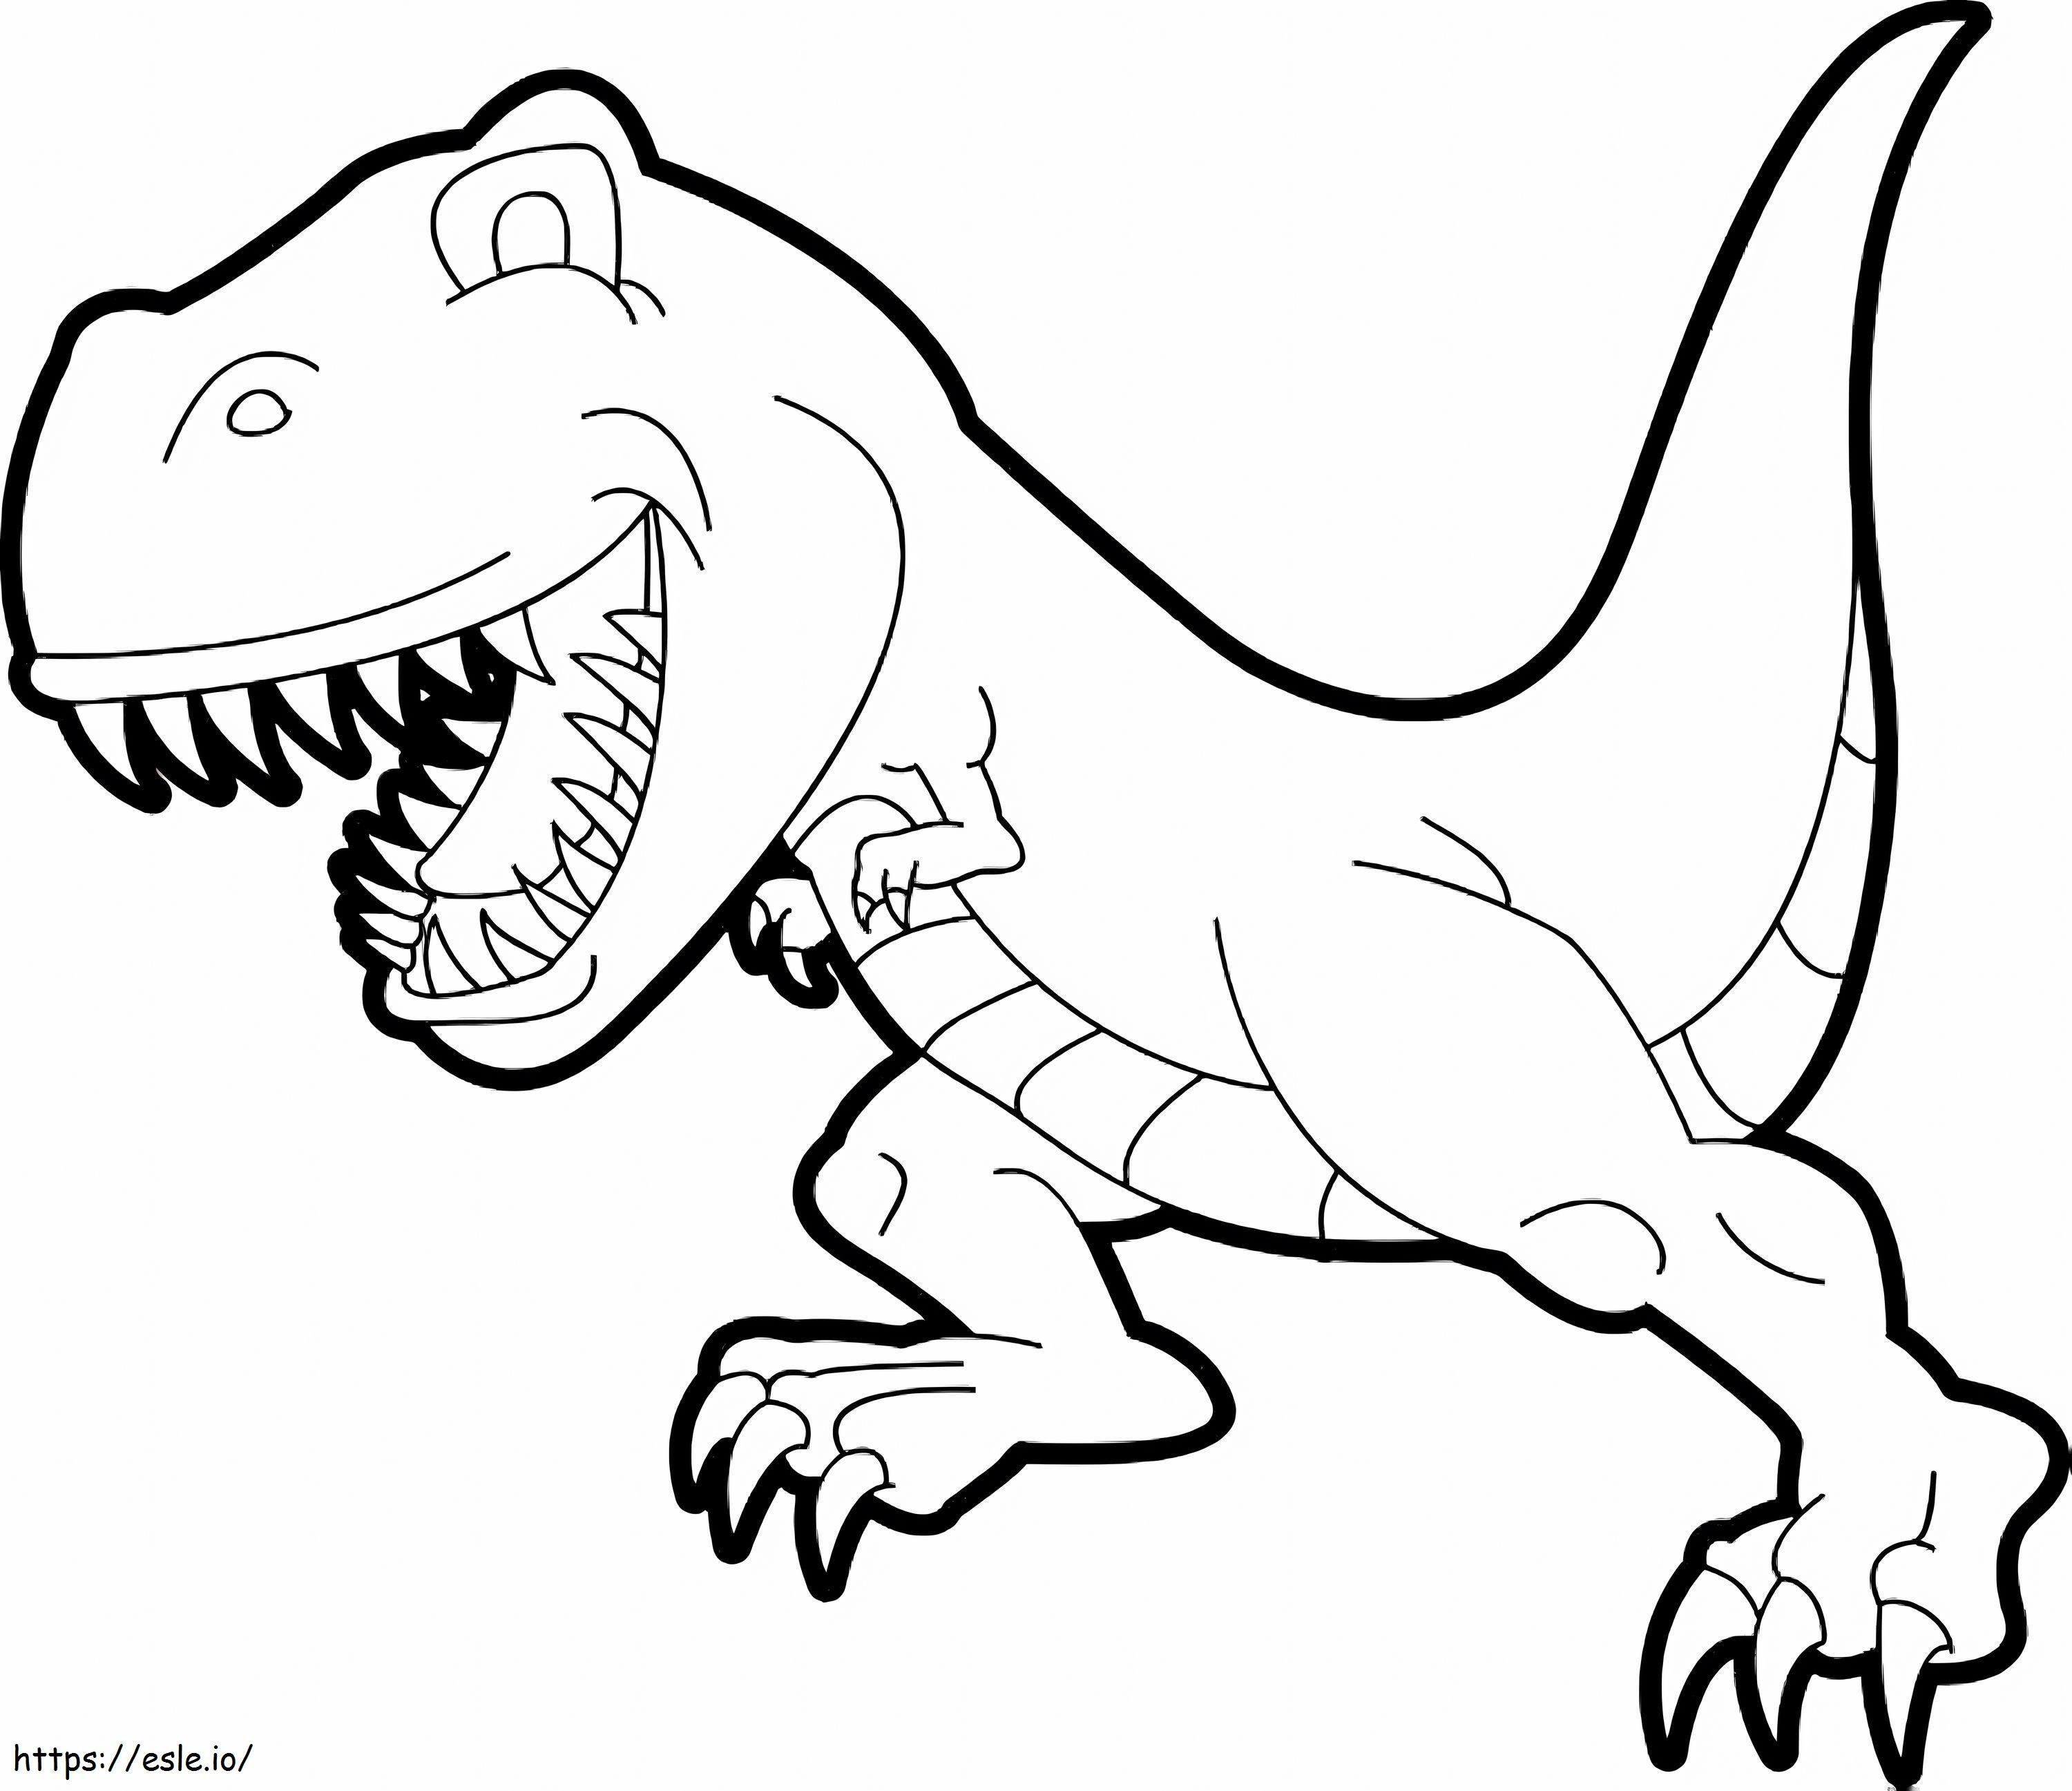 1539674613 T Rex Drawing Inspirationa Dinosaur Nuovo semplice dinosauro Best Of T Rex Drawing da colorare